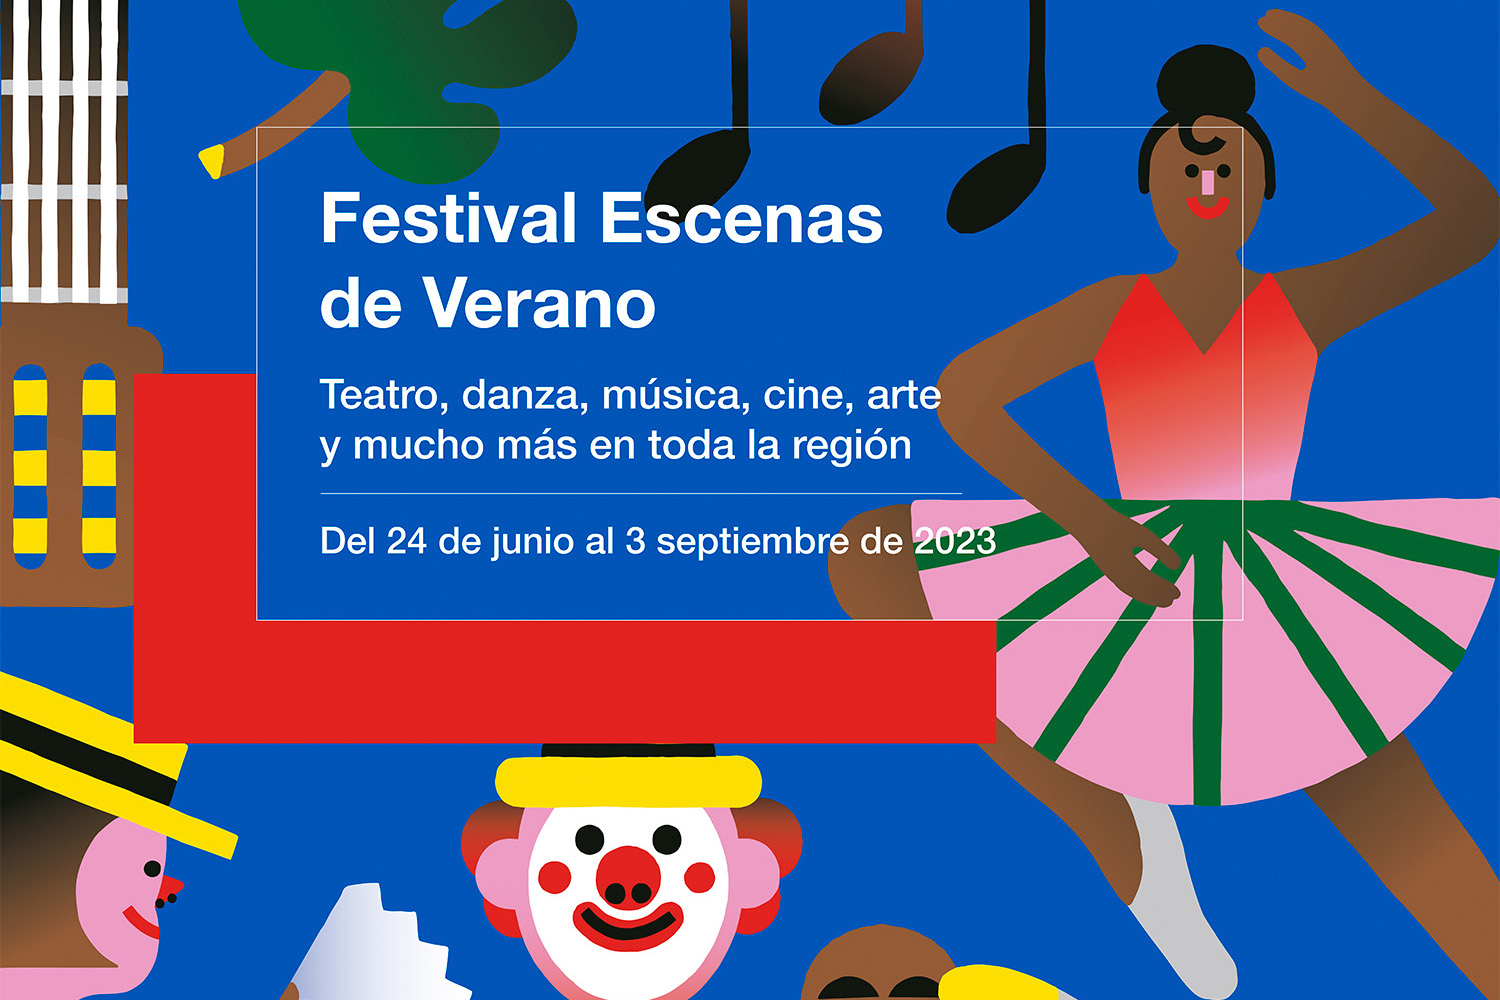 Poster of the Escenas de Verano Festival 2023